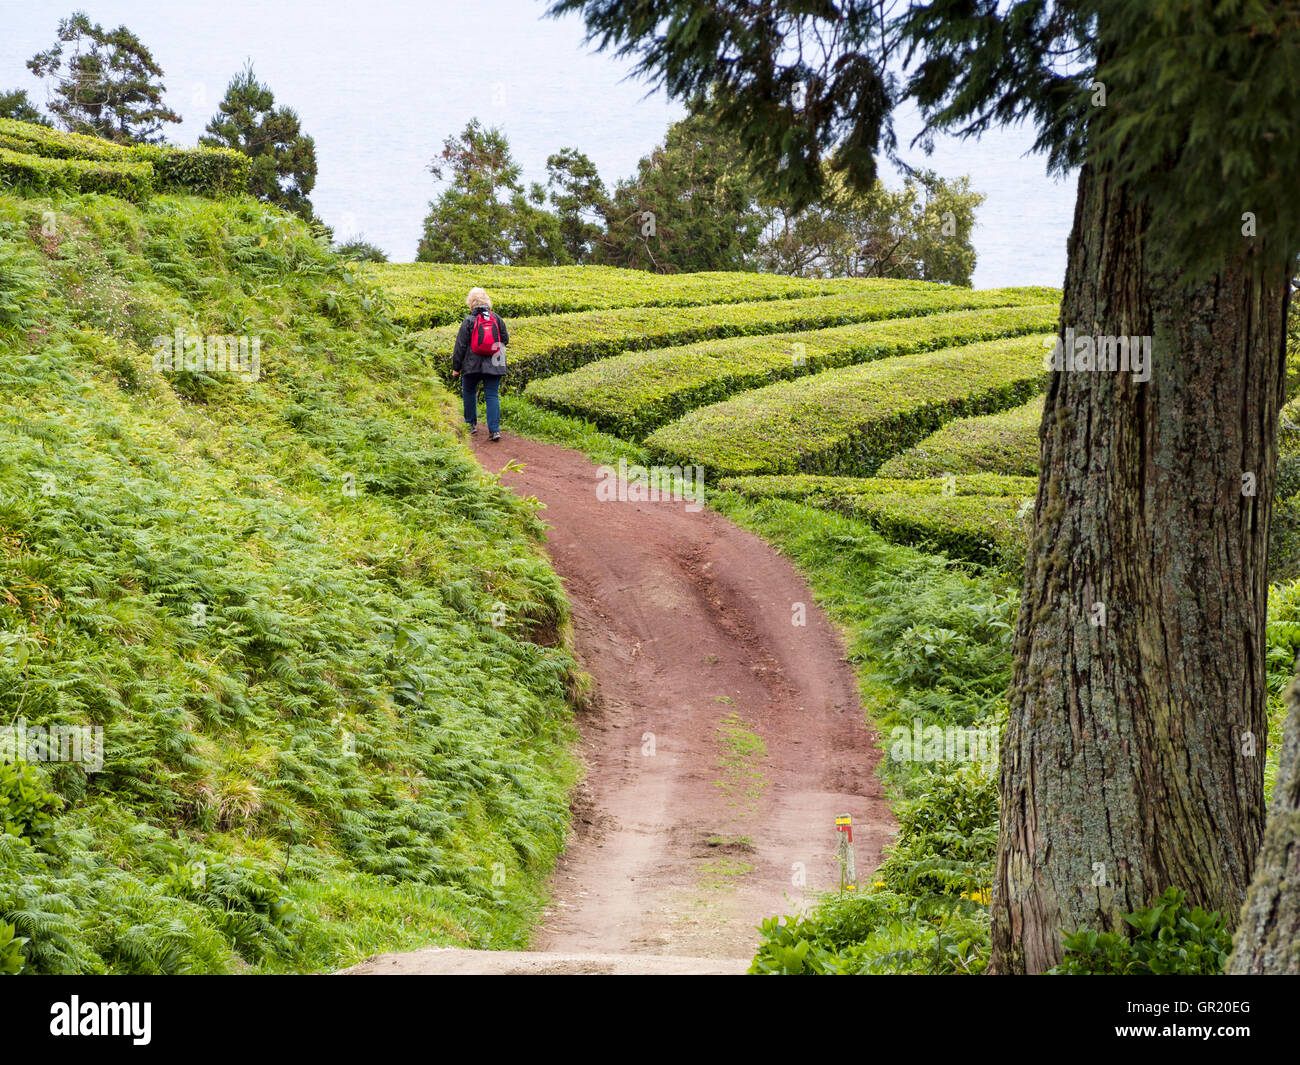 Walking the Tea Plantation. A lone woman walks along a plantation road through the green of the rows of tea bushes. Stock Photo